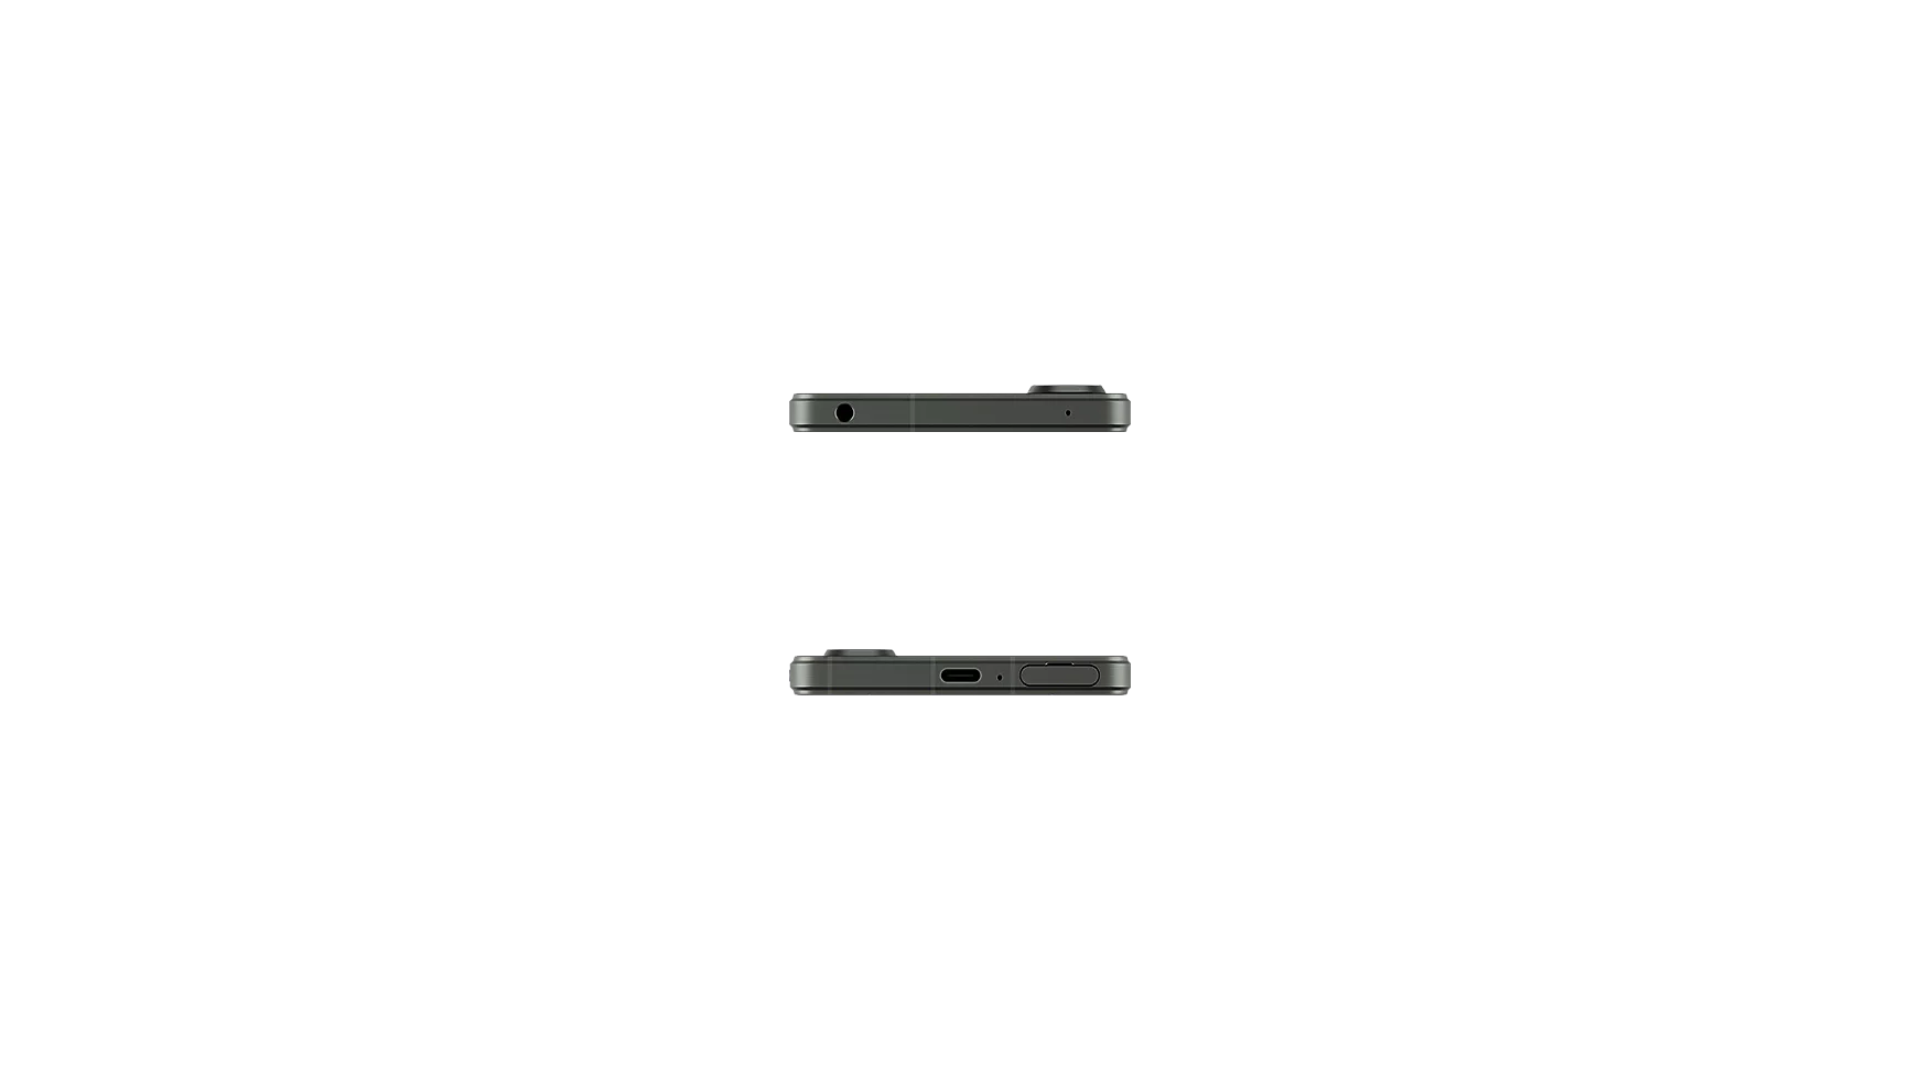 Sony Xperia 1 VI (12GB/256GB) โซนี่ เอ็กซ์พีเรีย 1 VI (12GB/256GB) : ภาพที่ 9